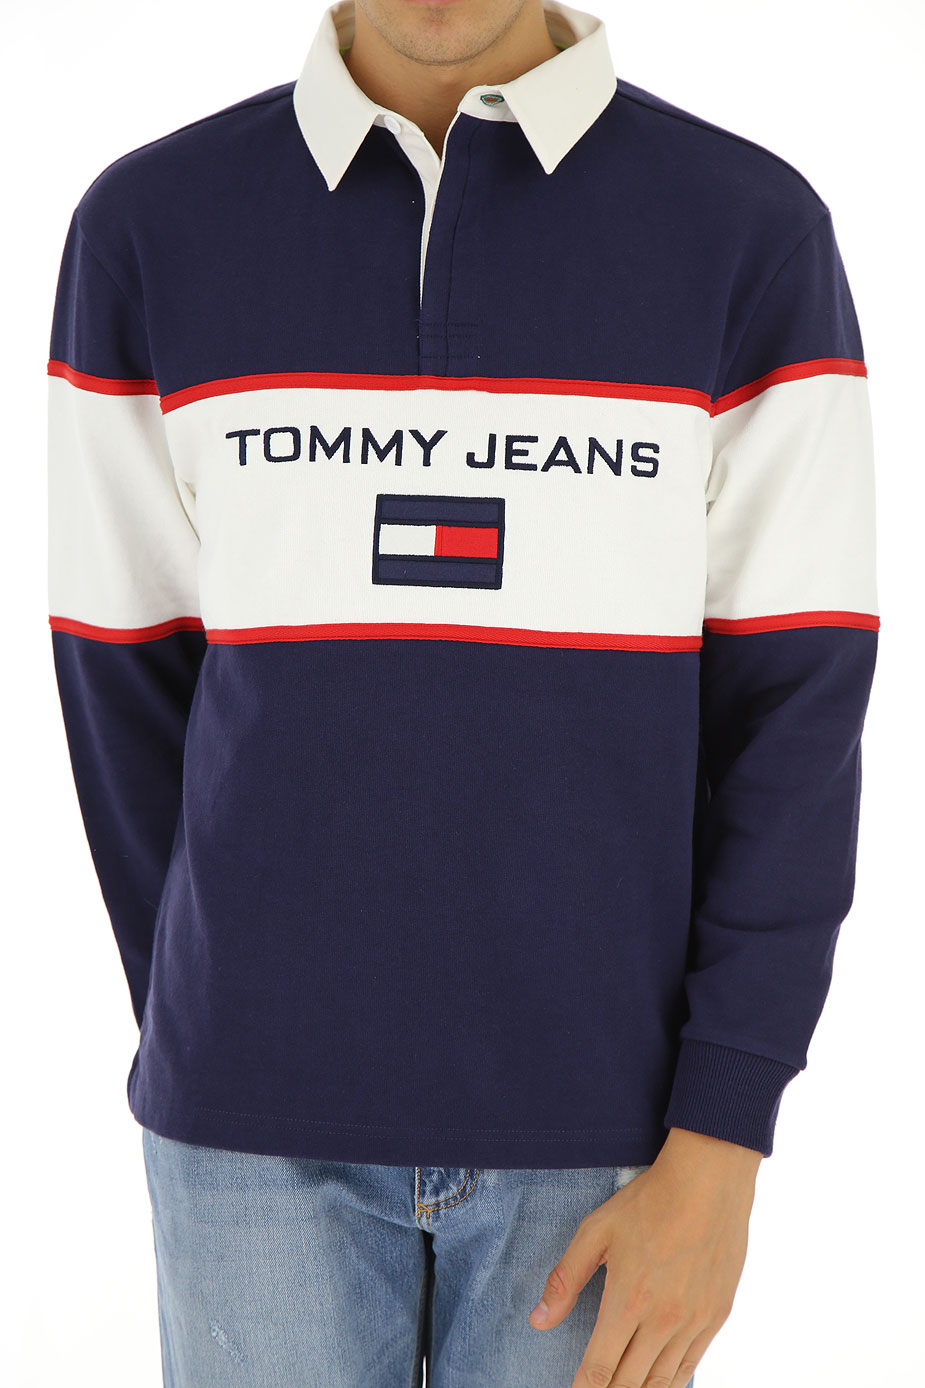 Mens Clothing Tommy Hilfiger, Style code: dm0dm05237-409-